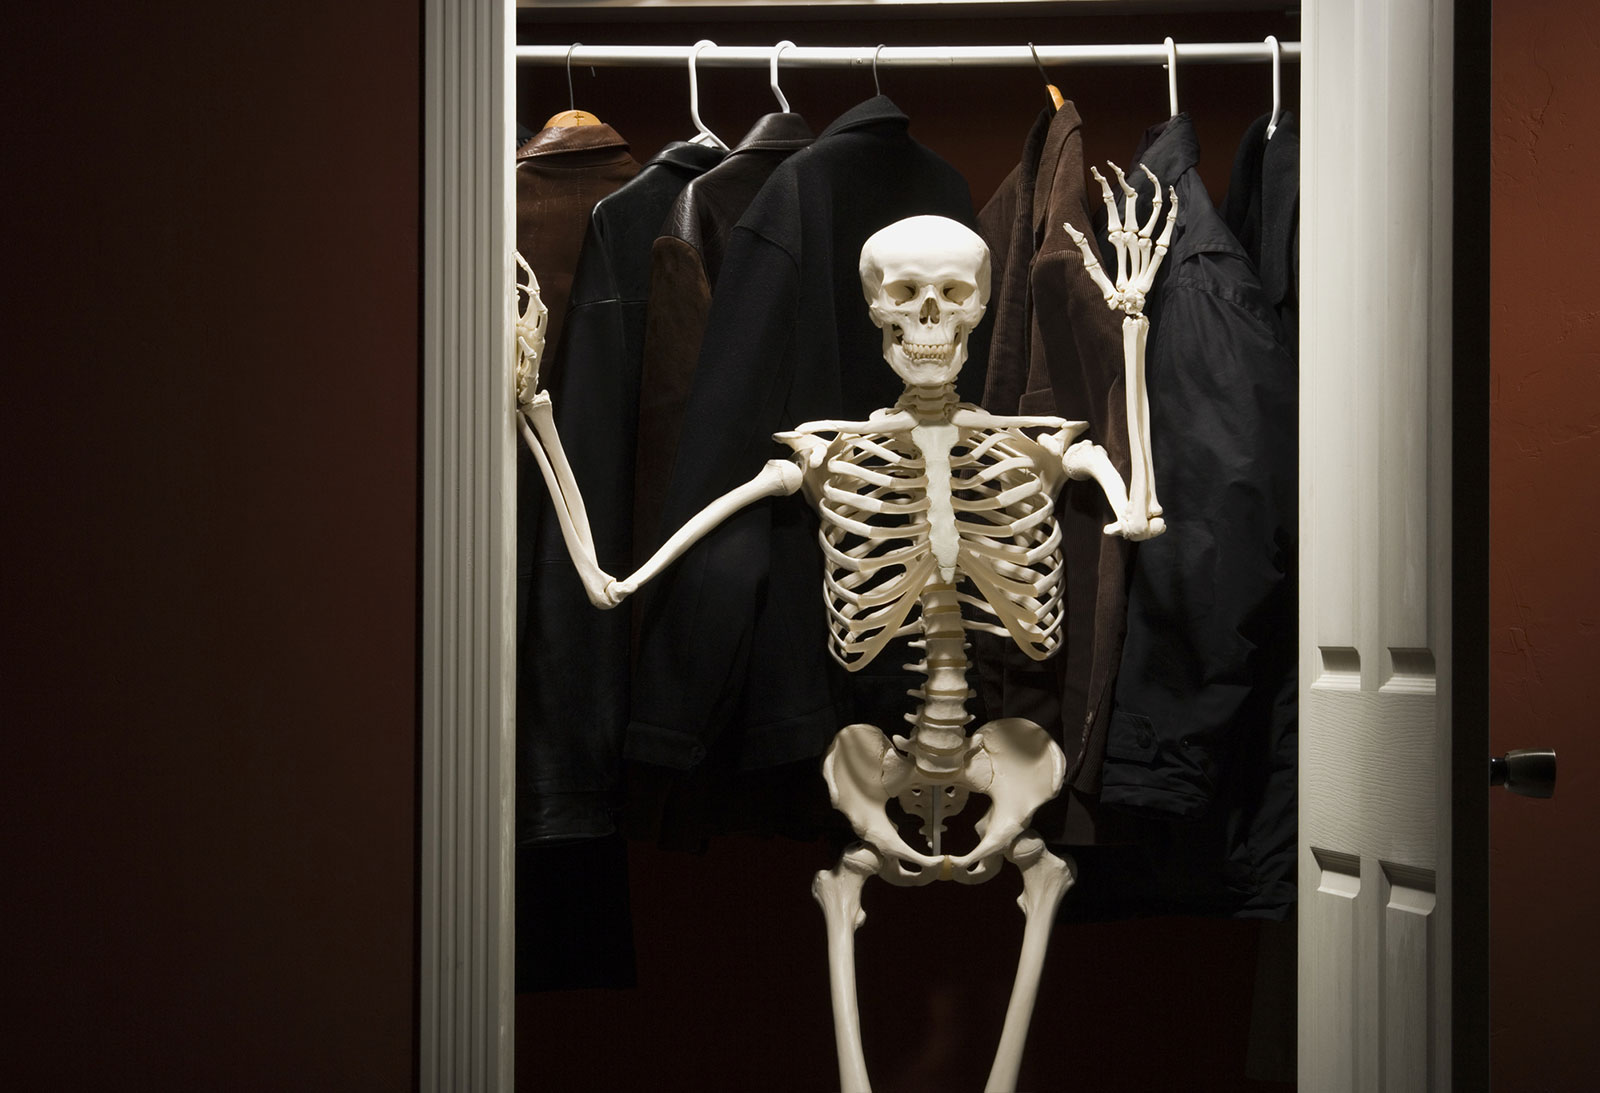 214439-1600x1093-skeleton-in-closet.jpg